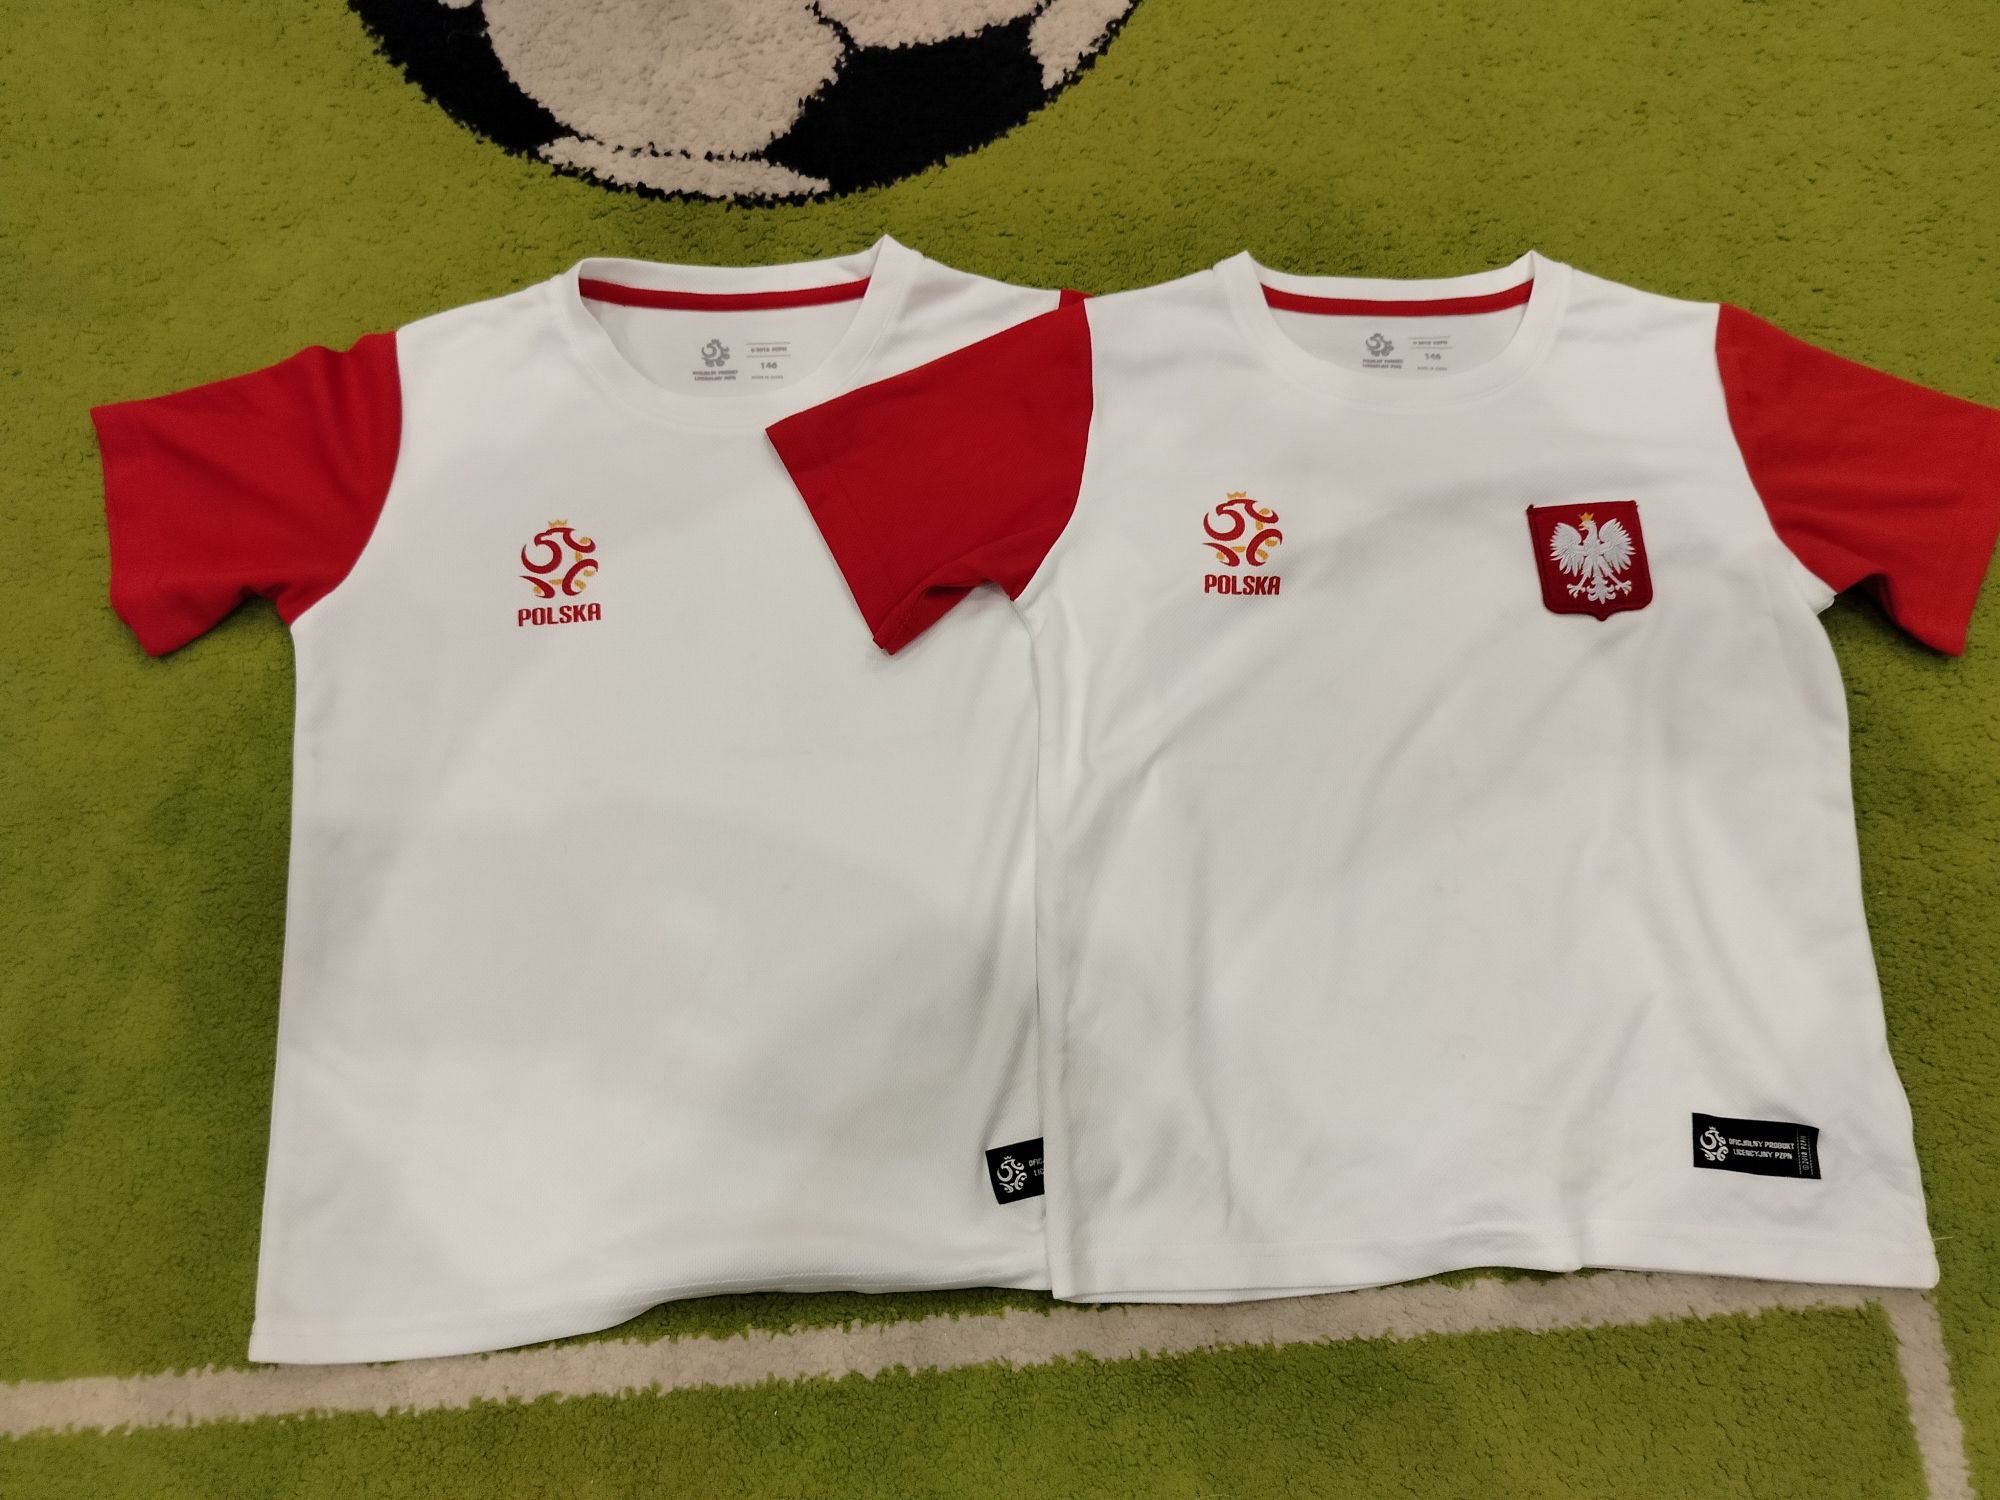 Koszulki Polska dla bliźniaków